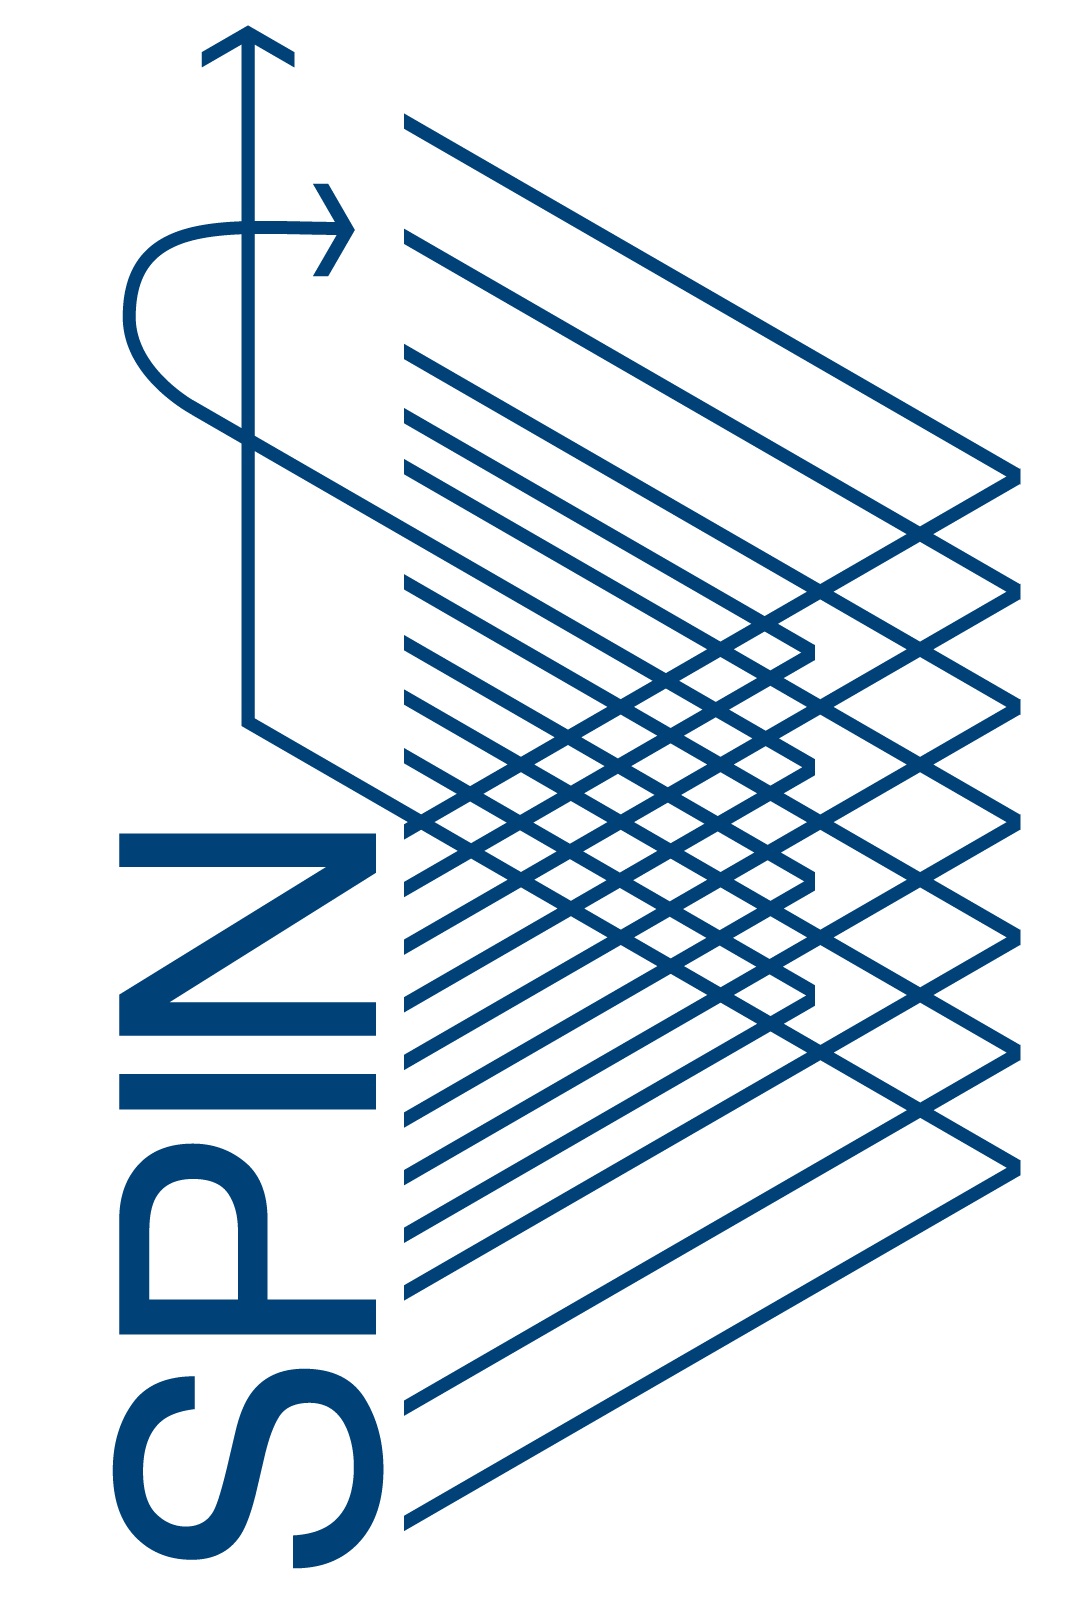 Logo SPIN